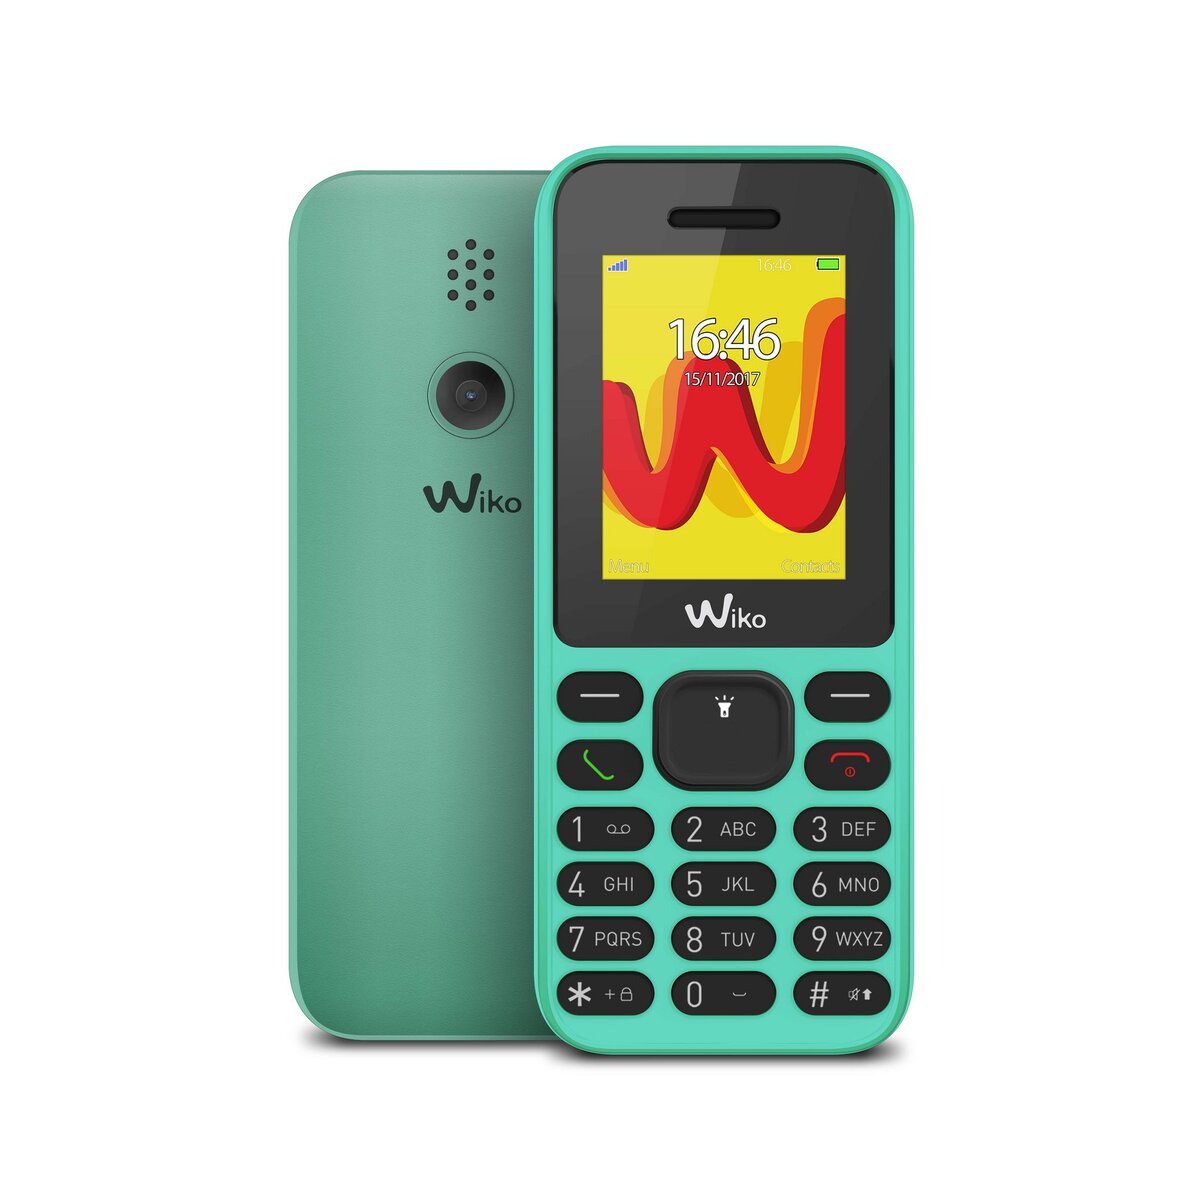 WIKO WIKO - Téléphone mobile - Lubi5 - Vert - Double SIM